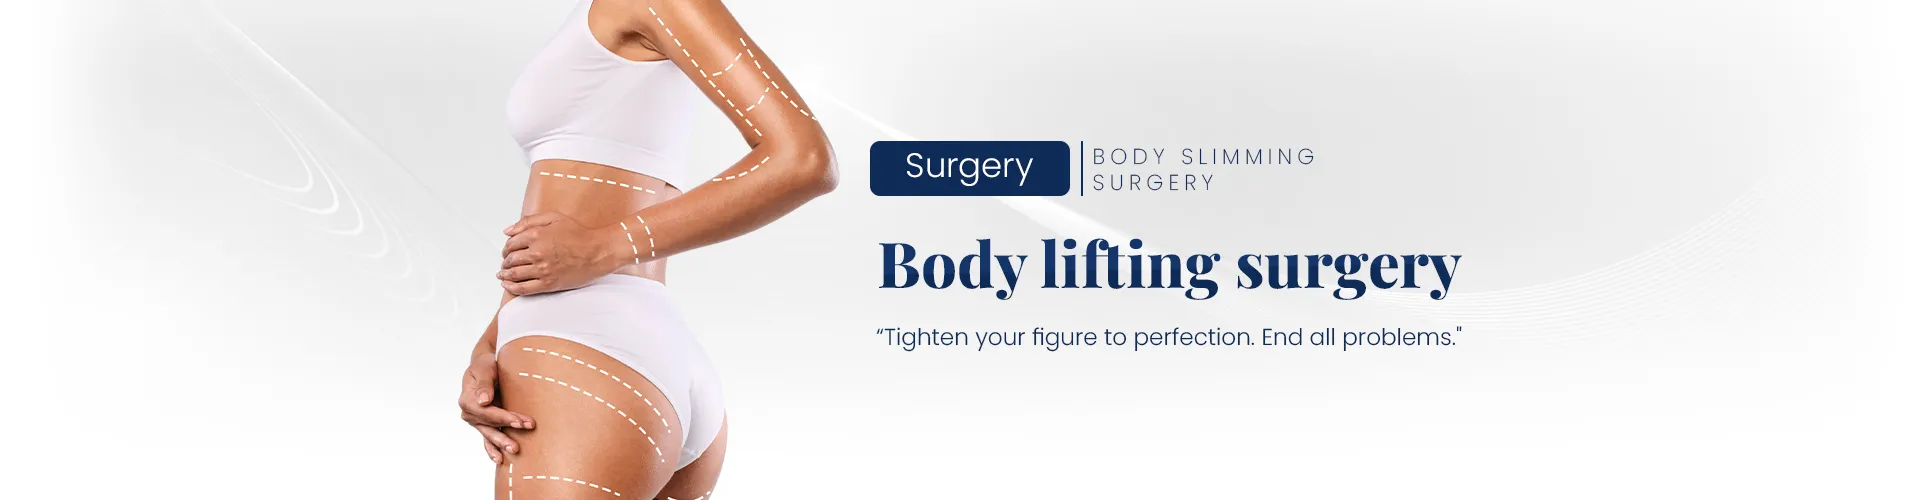 Body-lifting surgery | Milada Plastic Surgery Hospital 